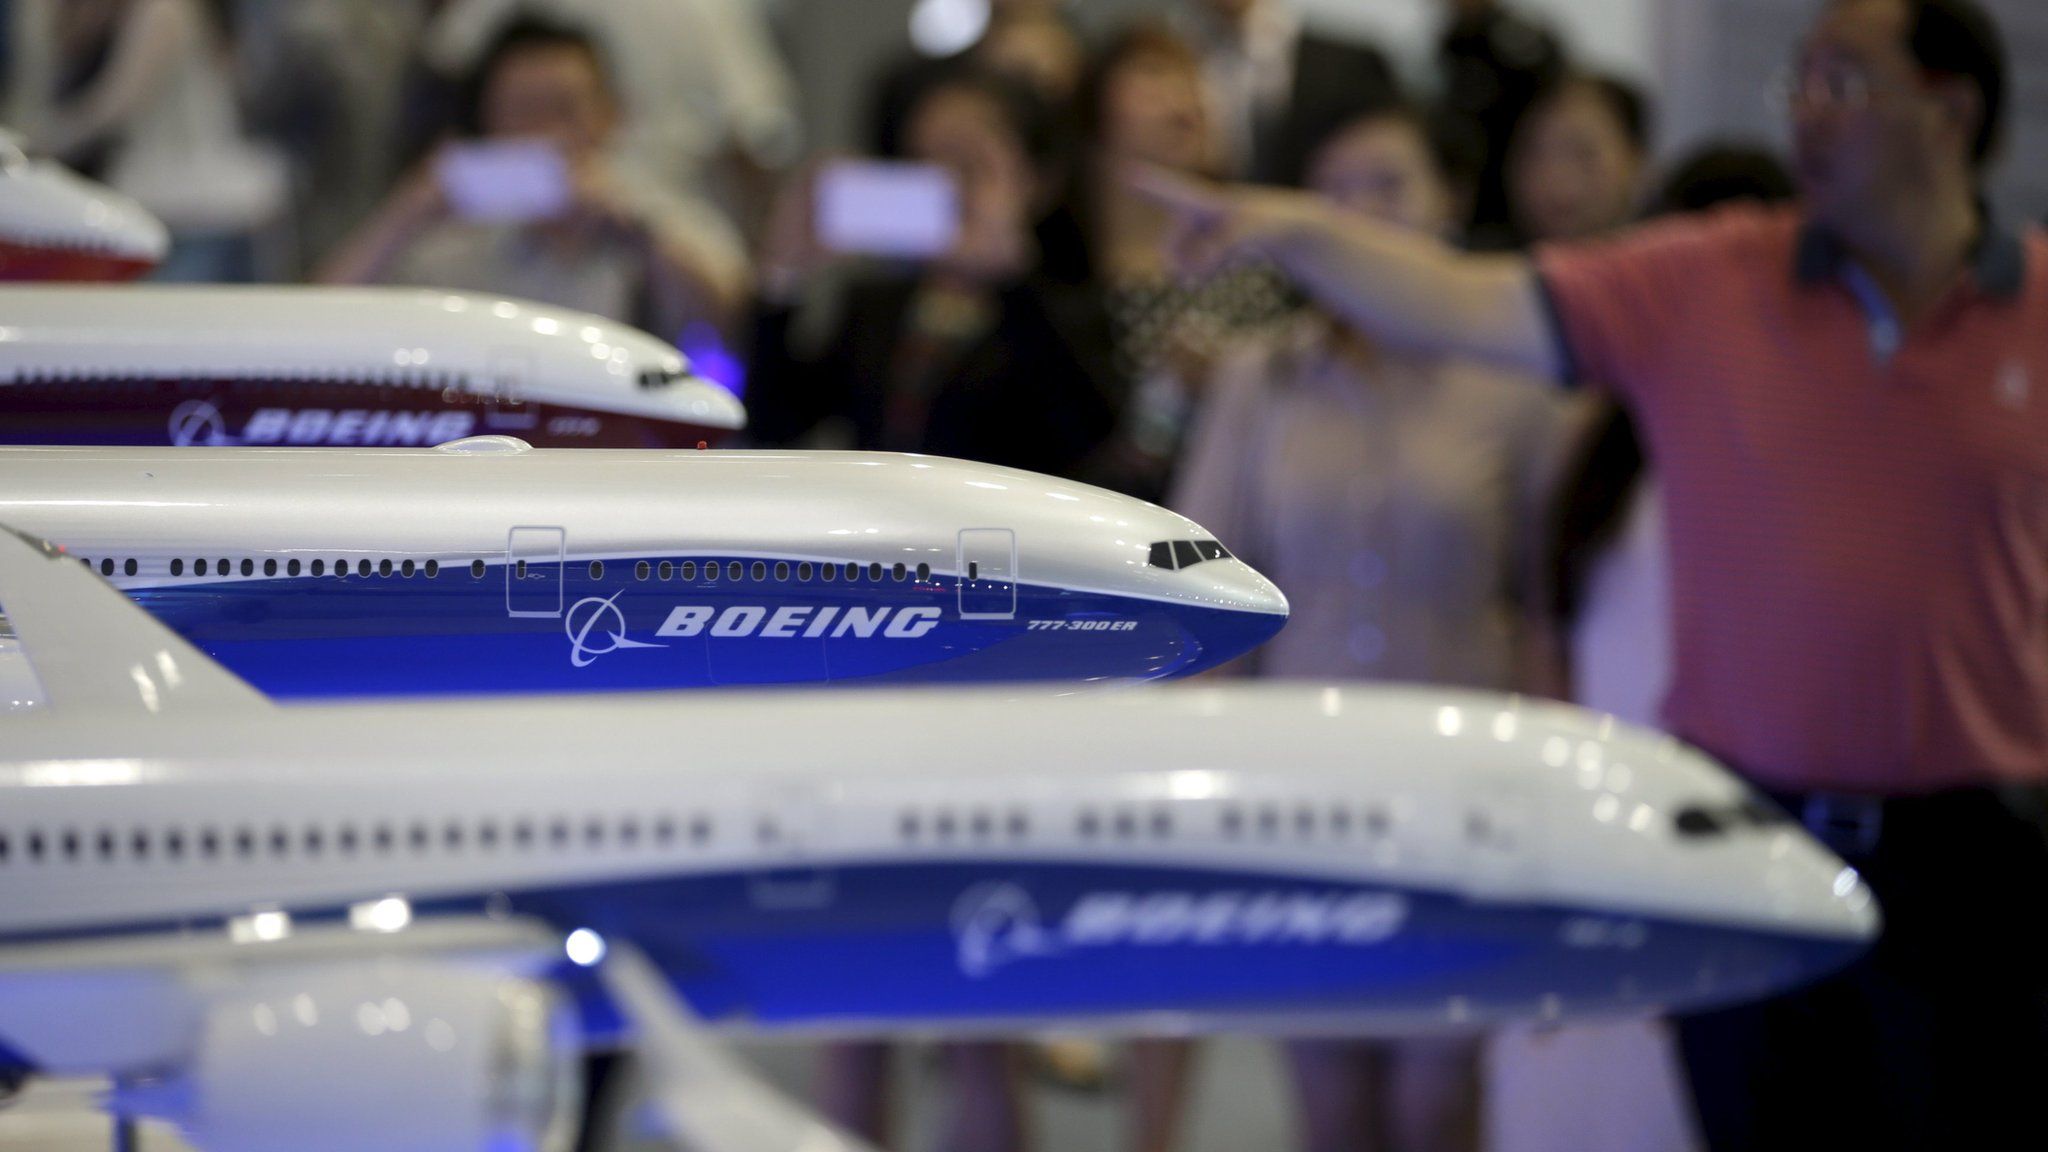 Models of Boeing aircraft at the Aviation Expo China 2015